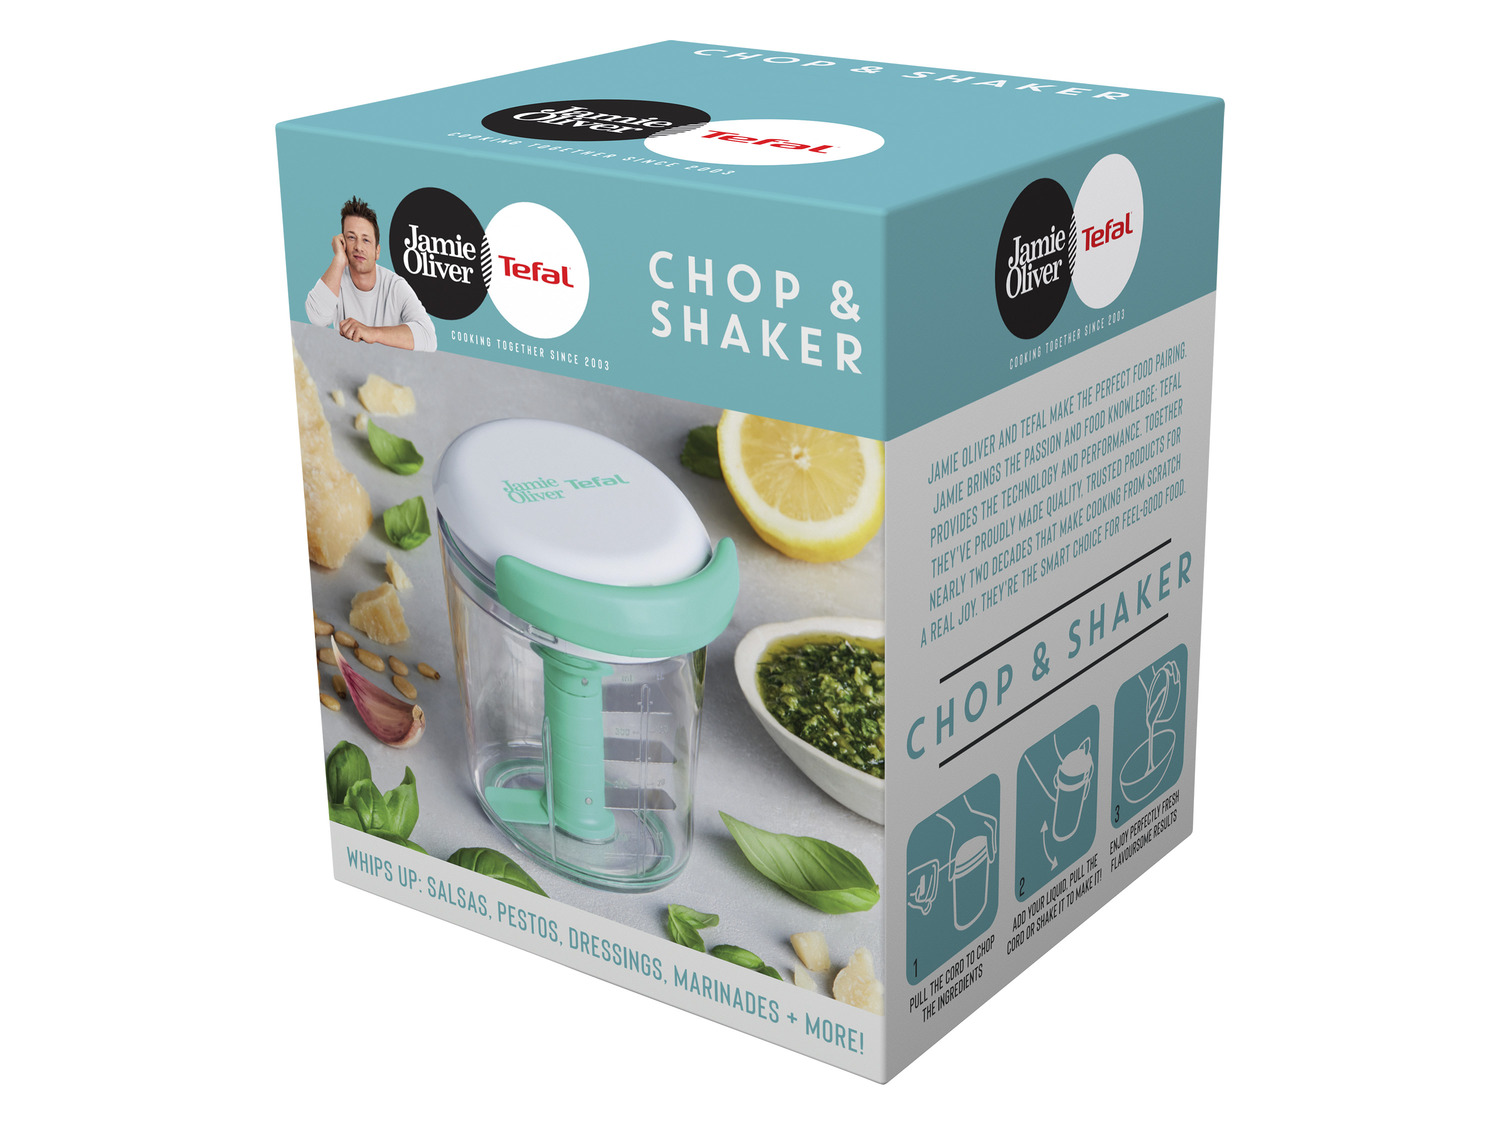 Chop Shaker, Tefal Essentials & Jamie Kitchen 4… Oliver